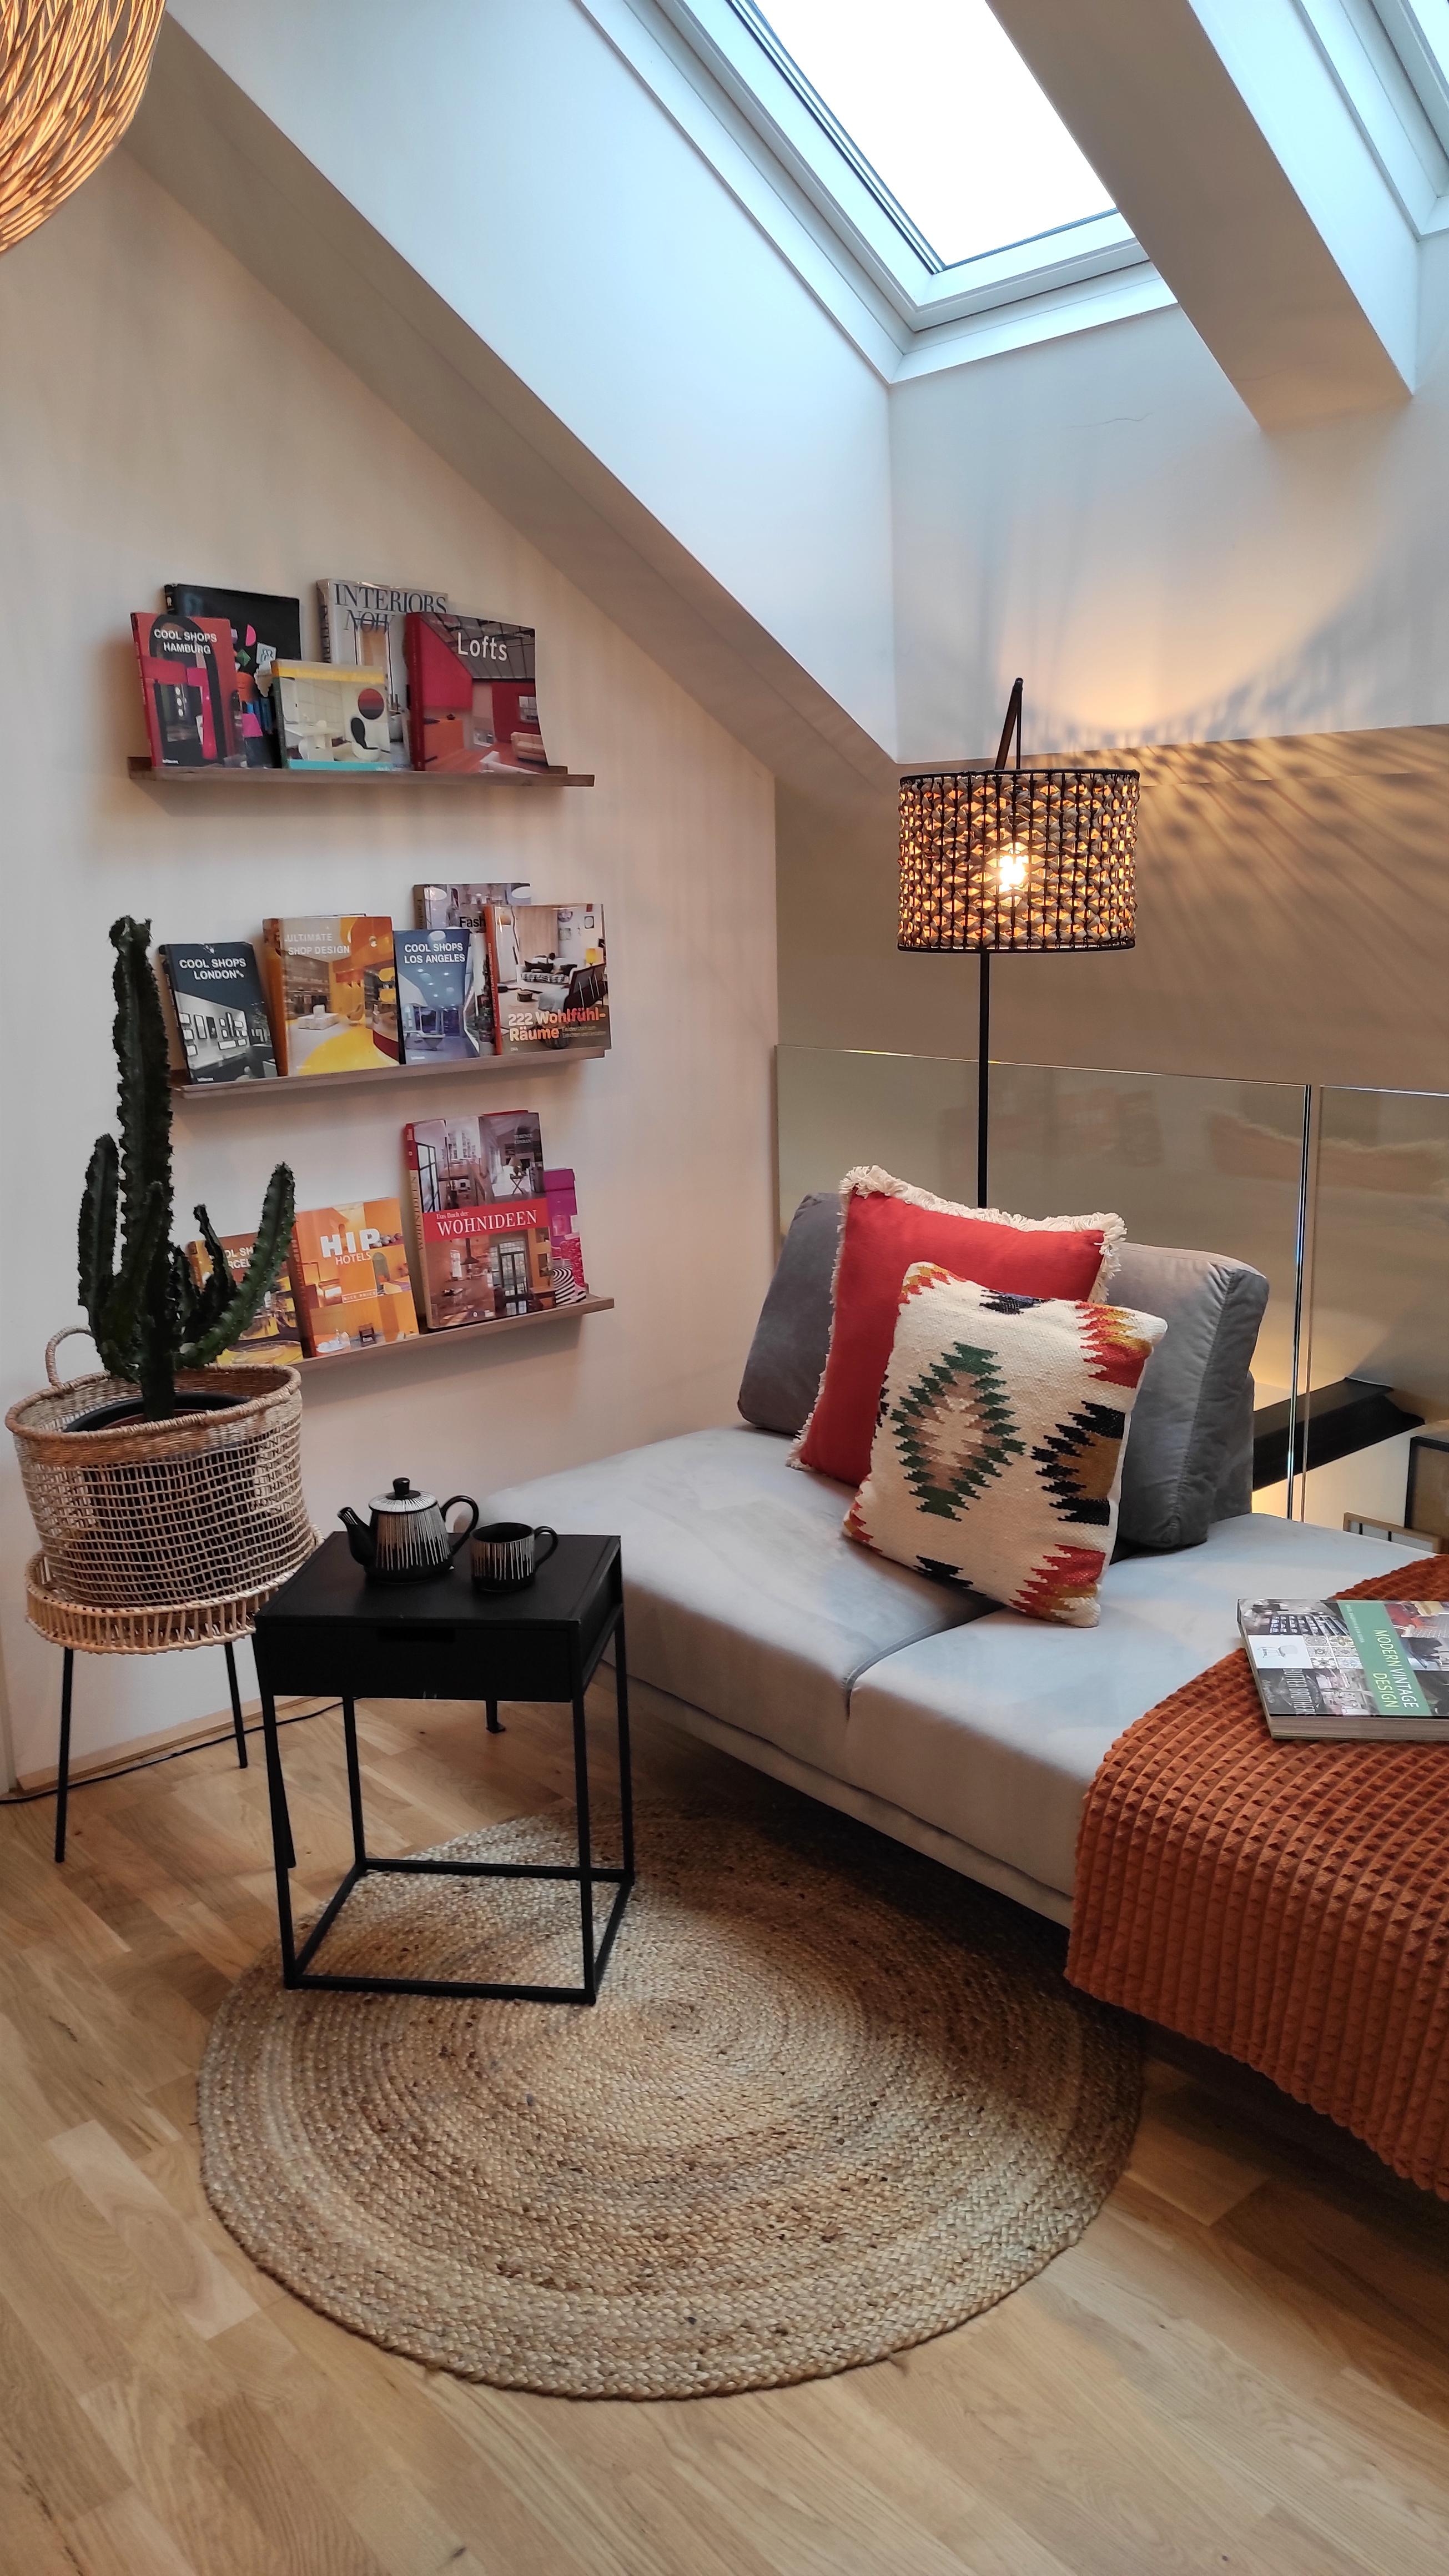 #cozyhome #bookcorner #herbstelt #teatime #lesen #chillen #hygge #design #furniture #home #living